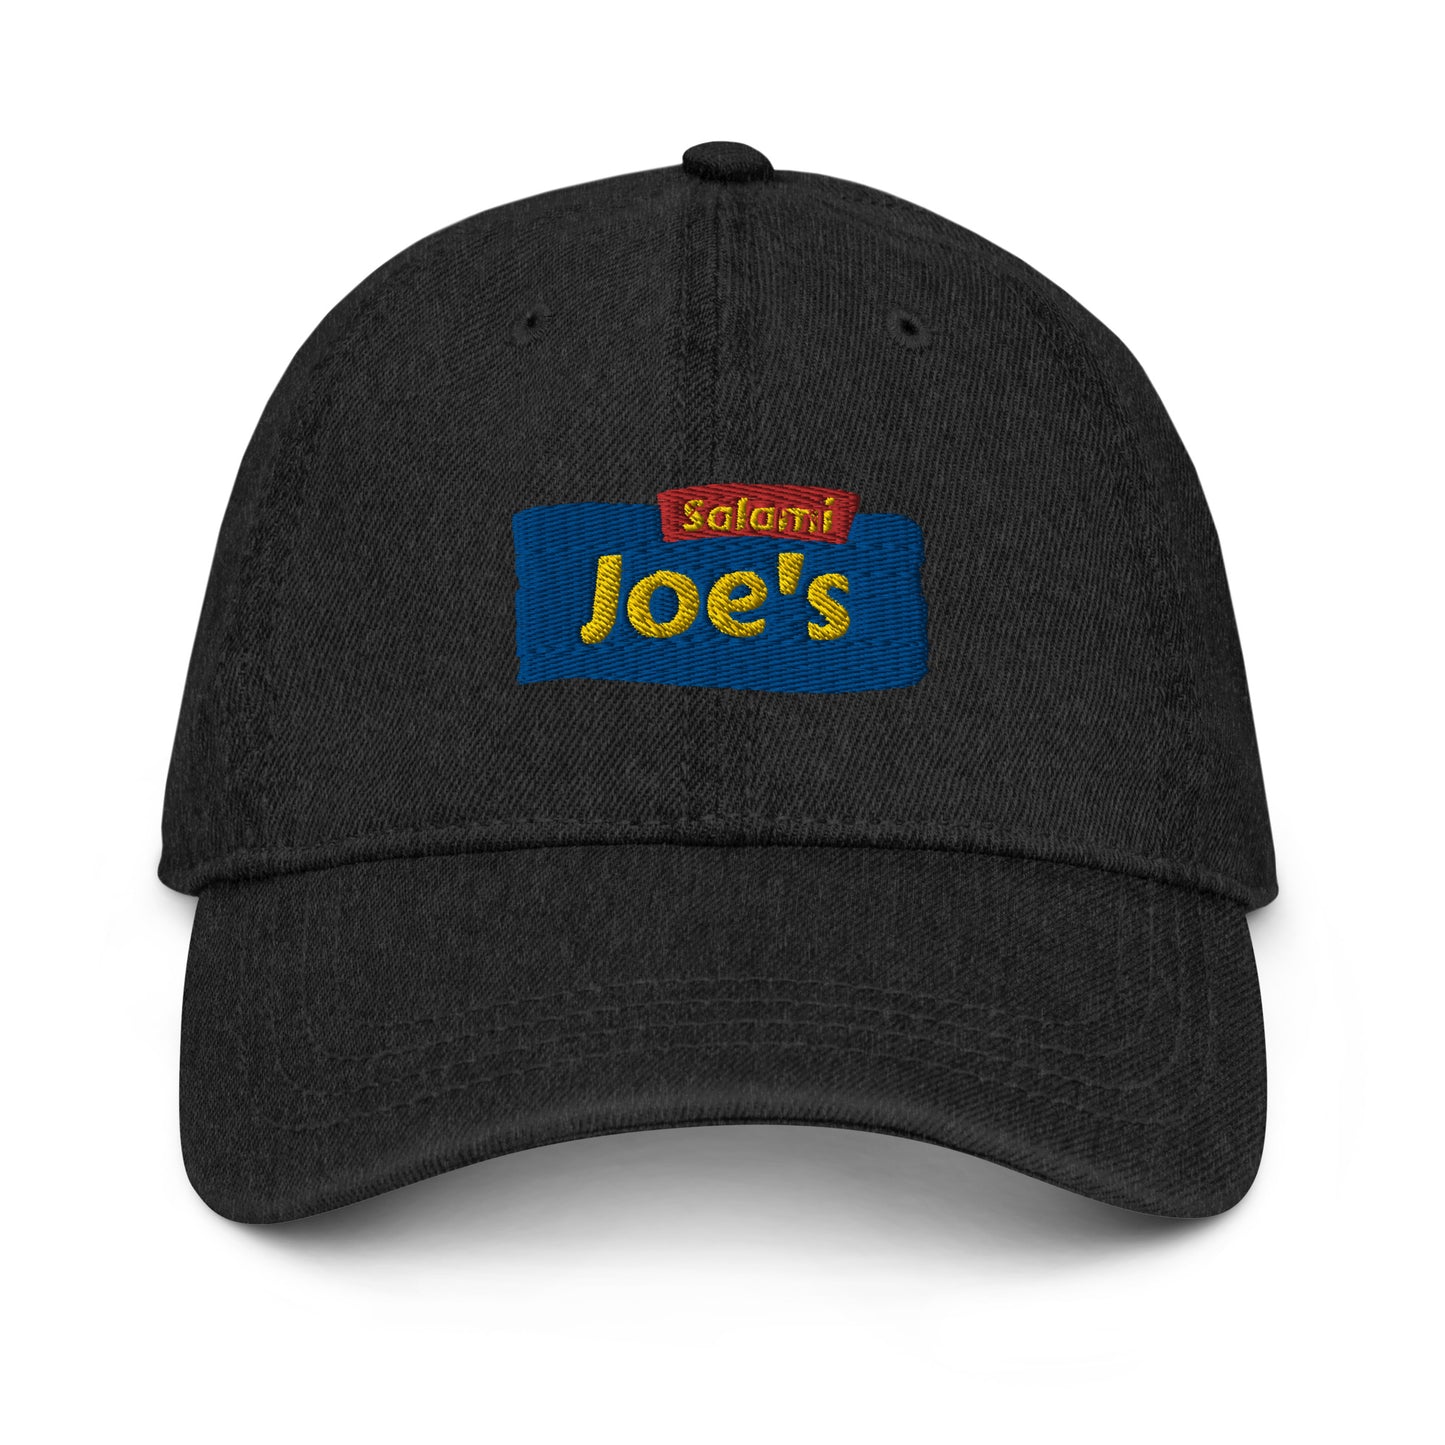 Salami Joe's Denim Hat